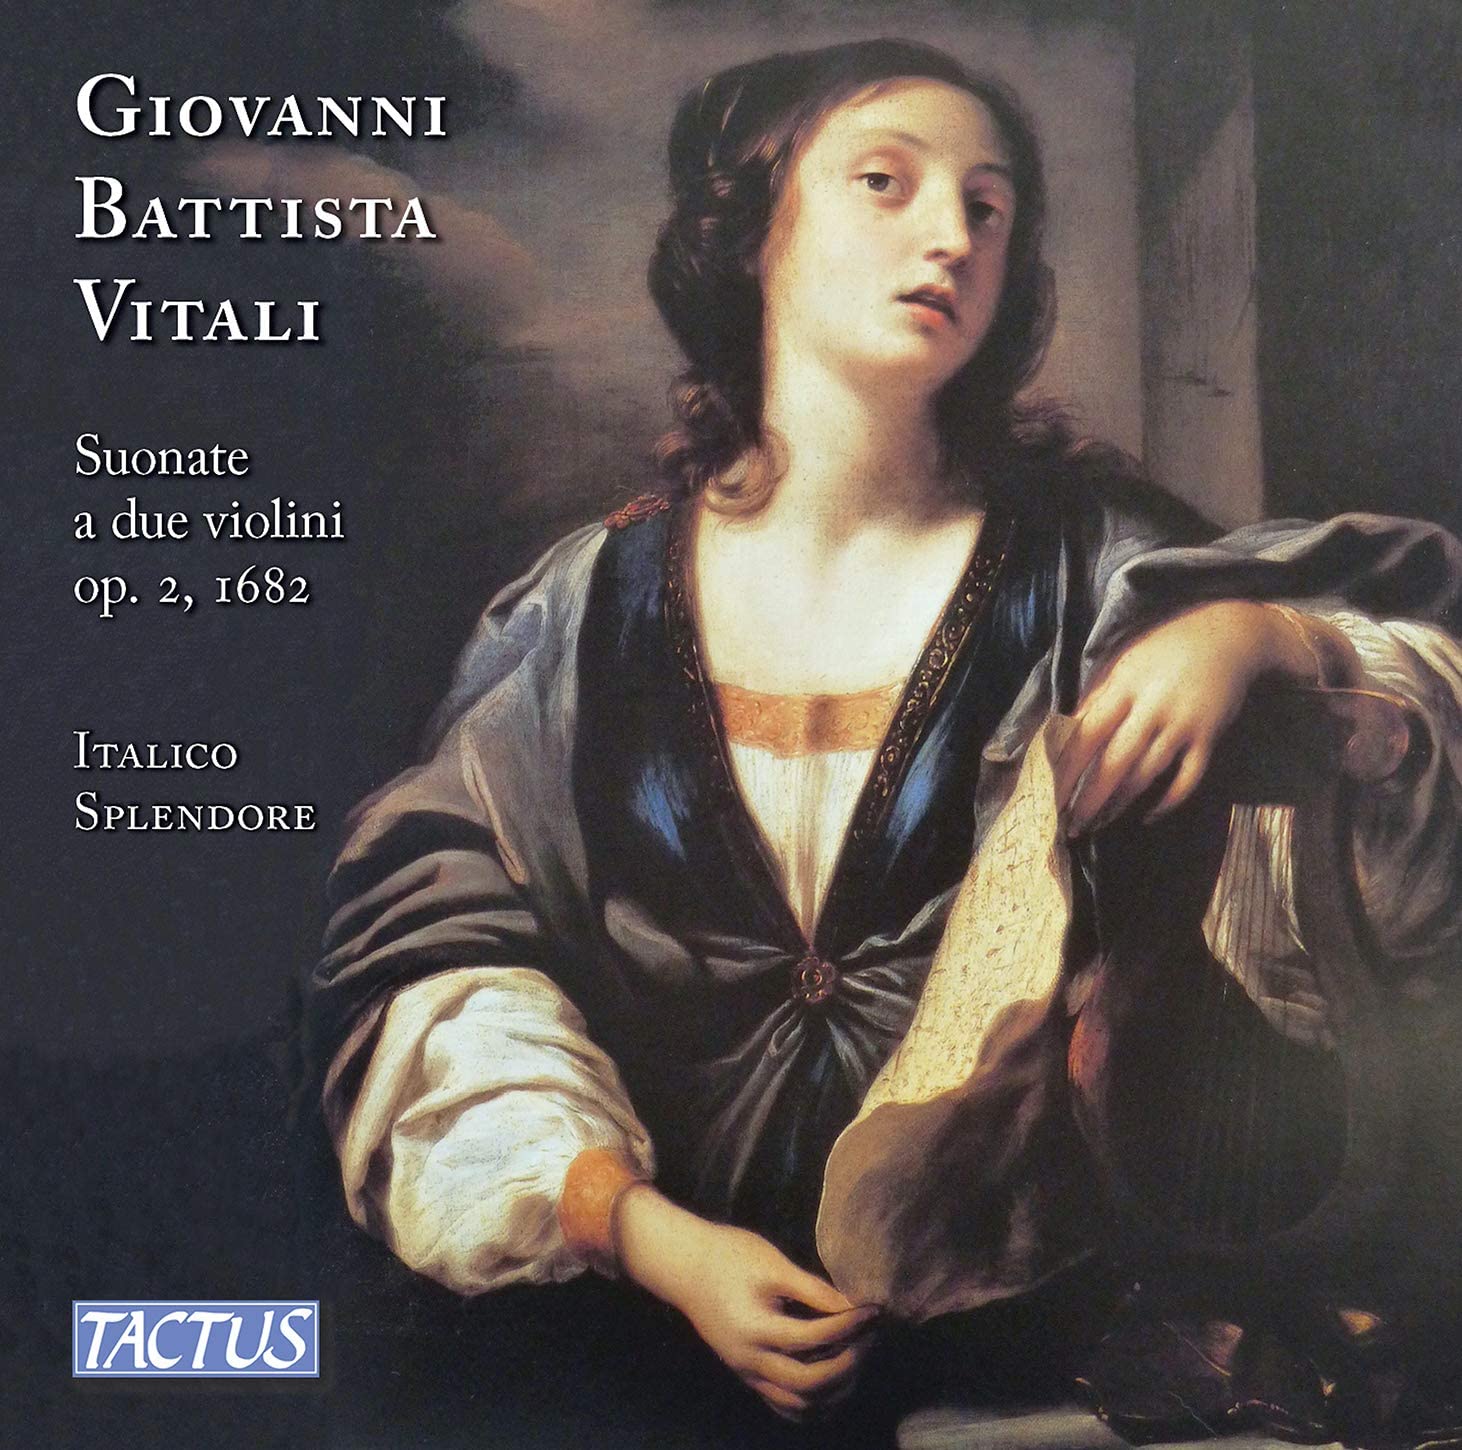 CD cover of Vitali's op. 2 trio sonatas